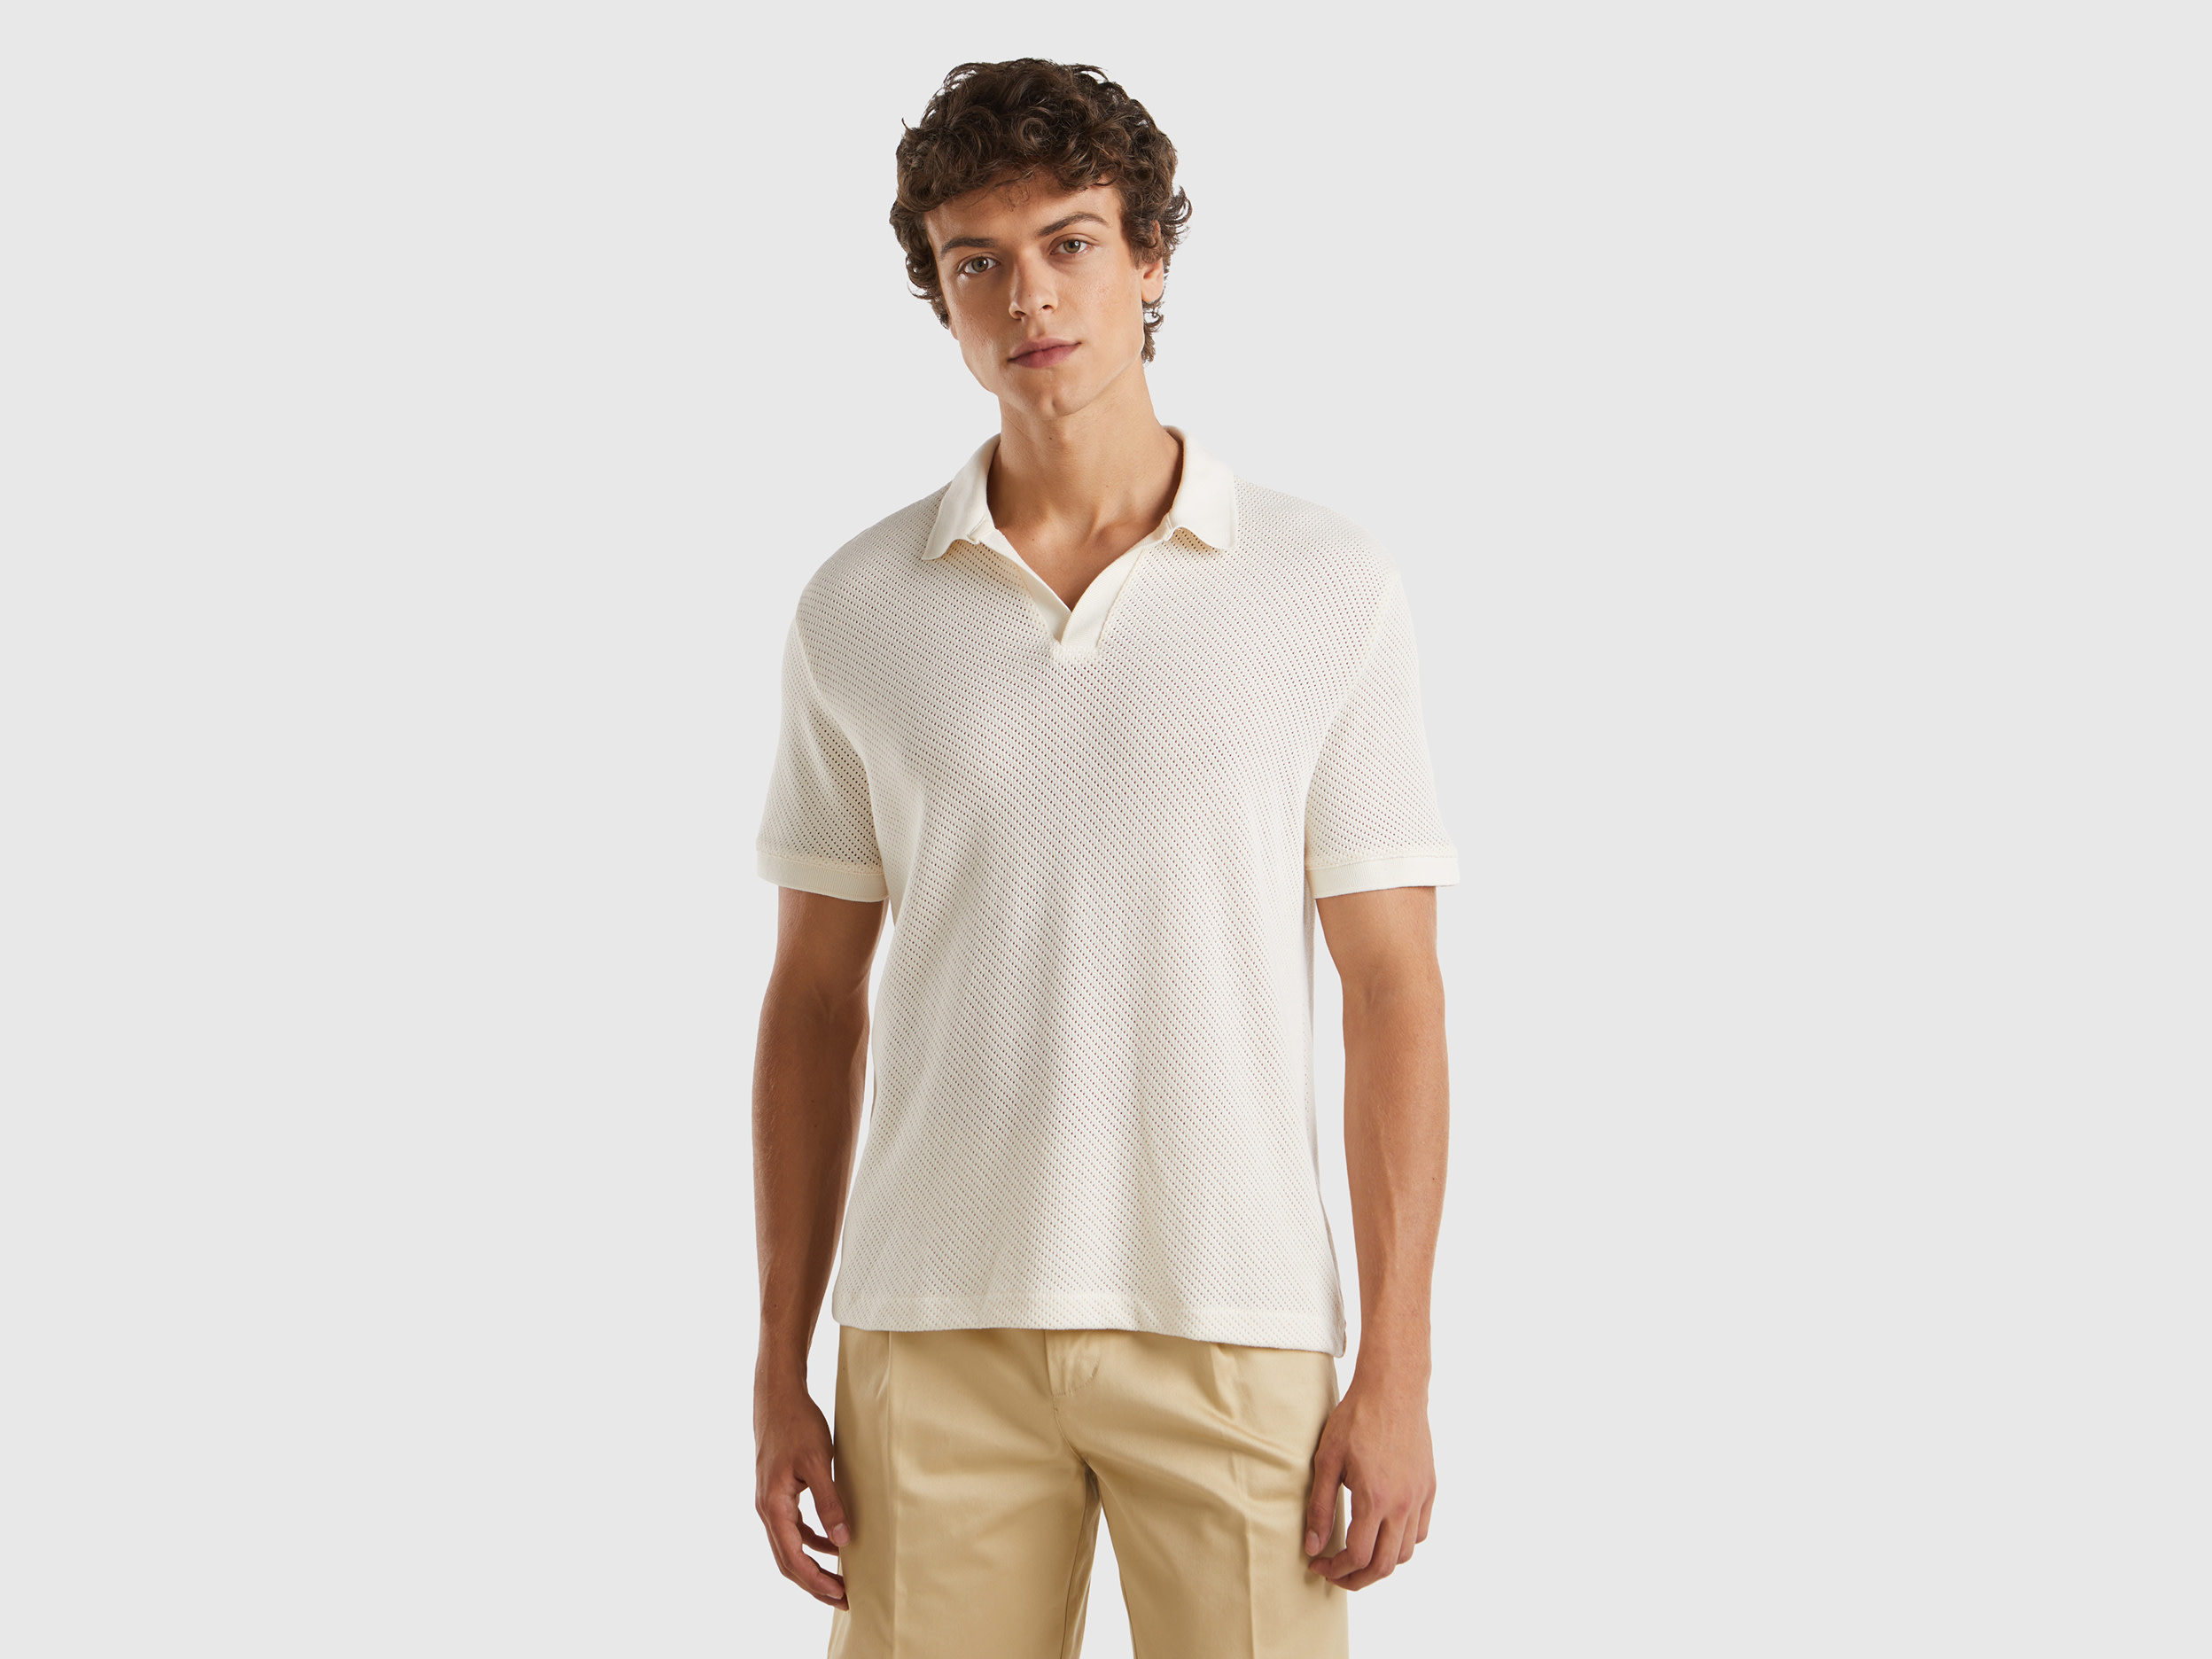 Image of Benetton, Perforated Cotton Polo Shirt, size M, Creamy White, Men